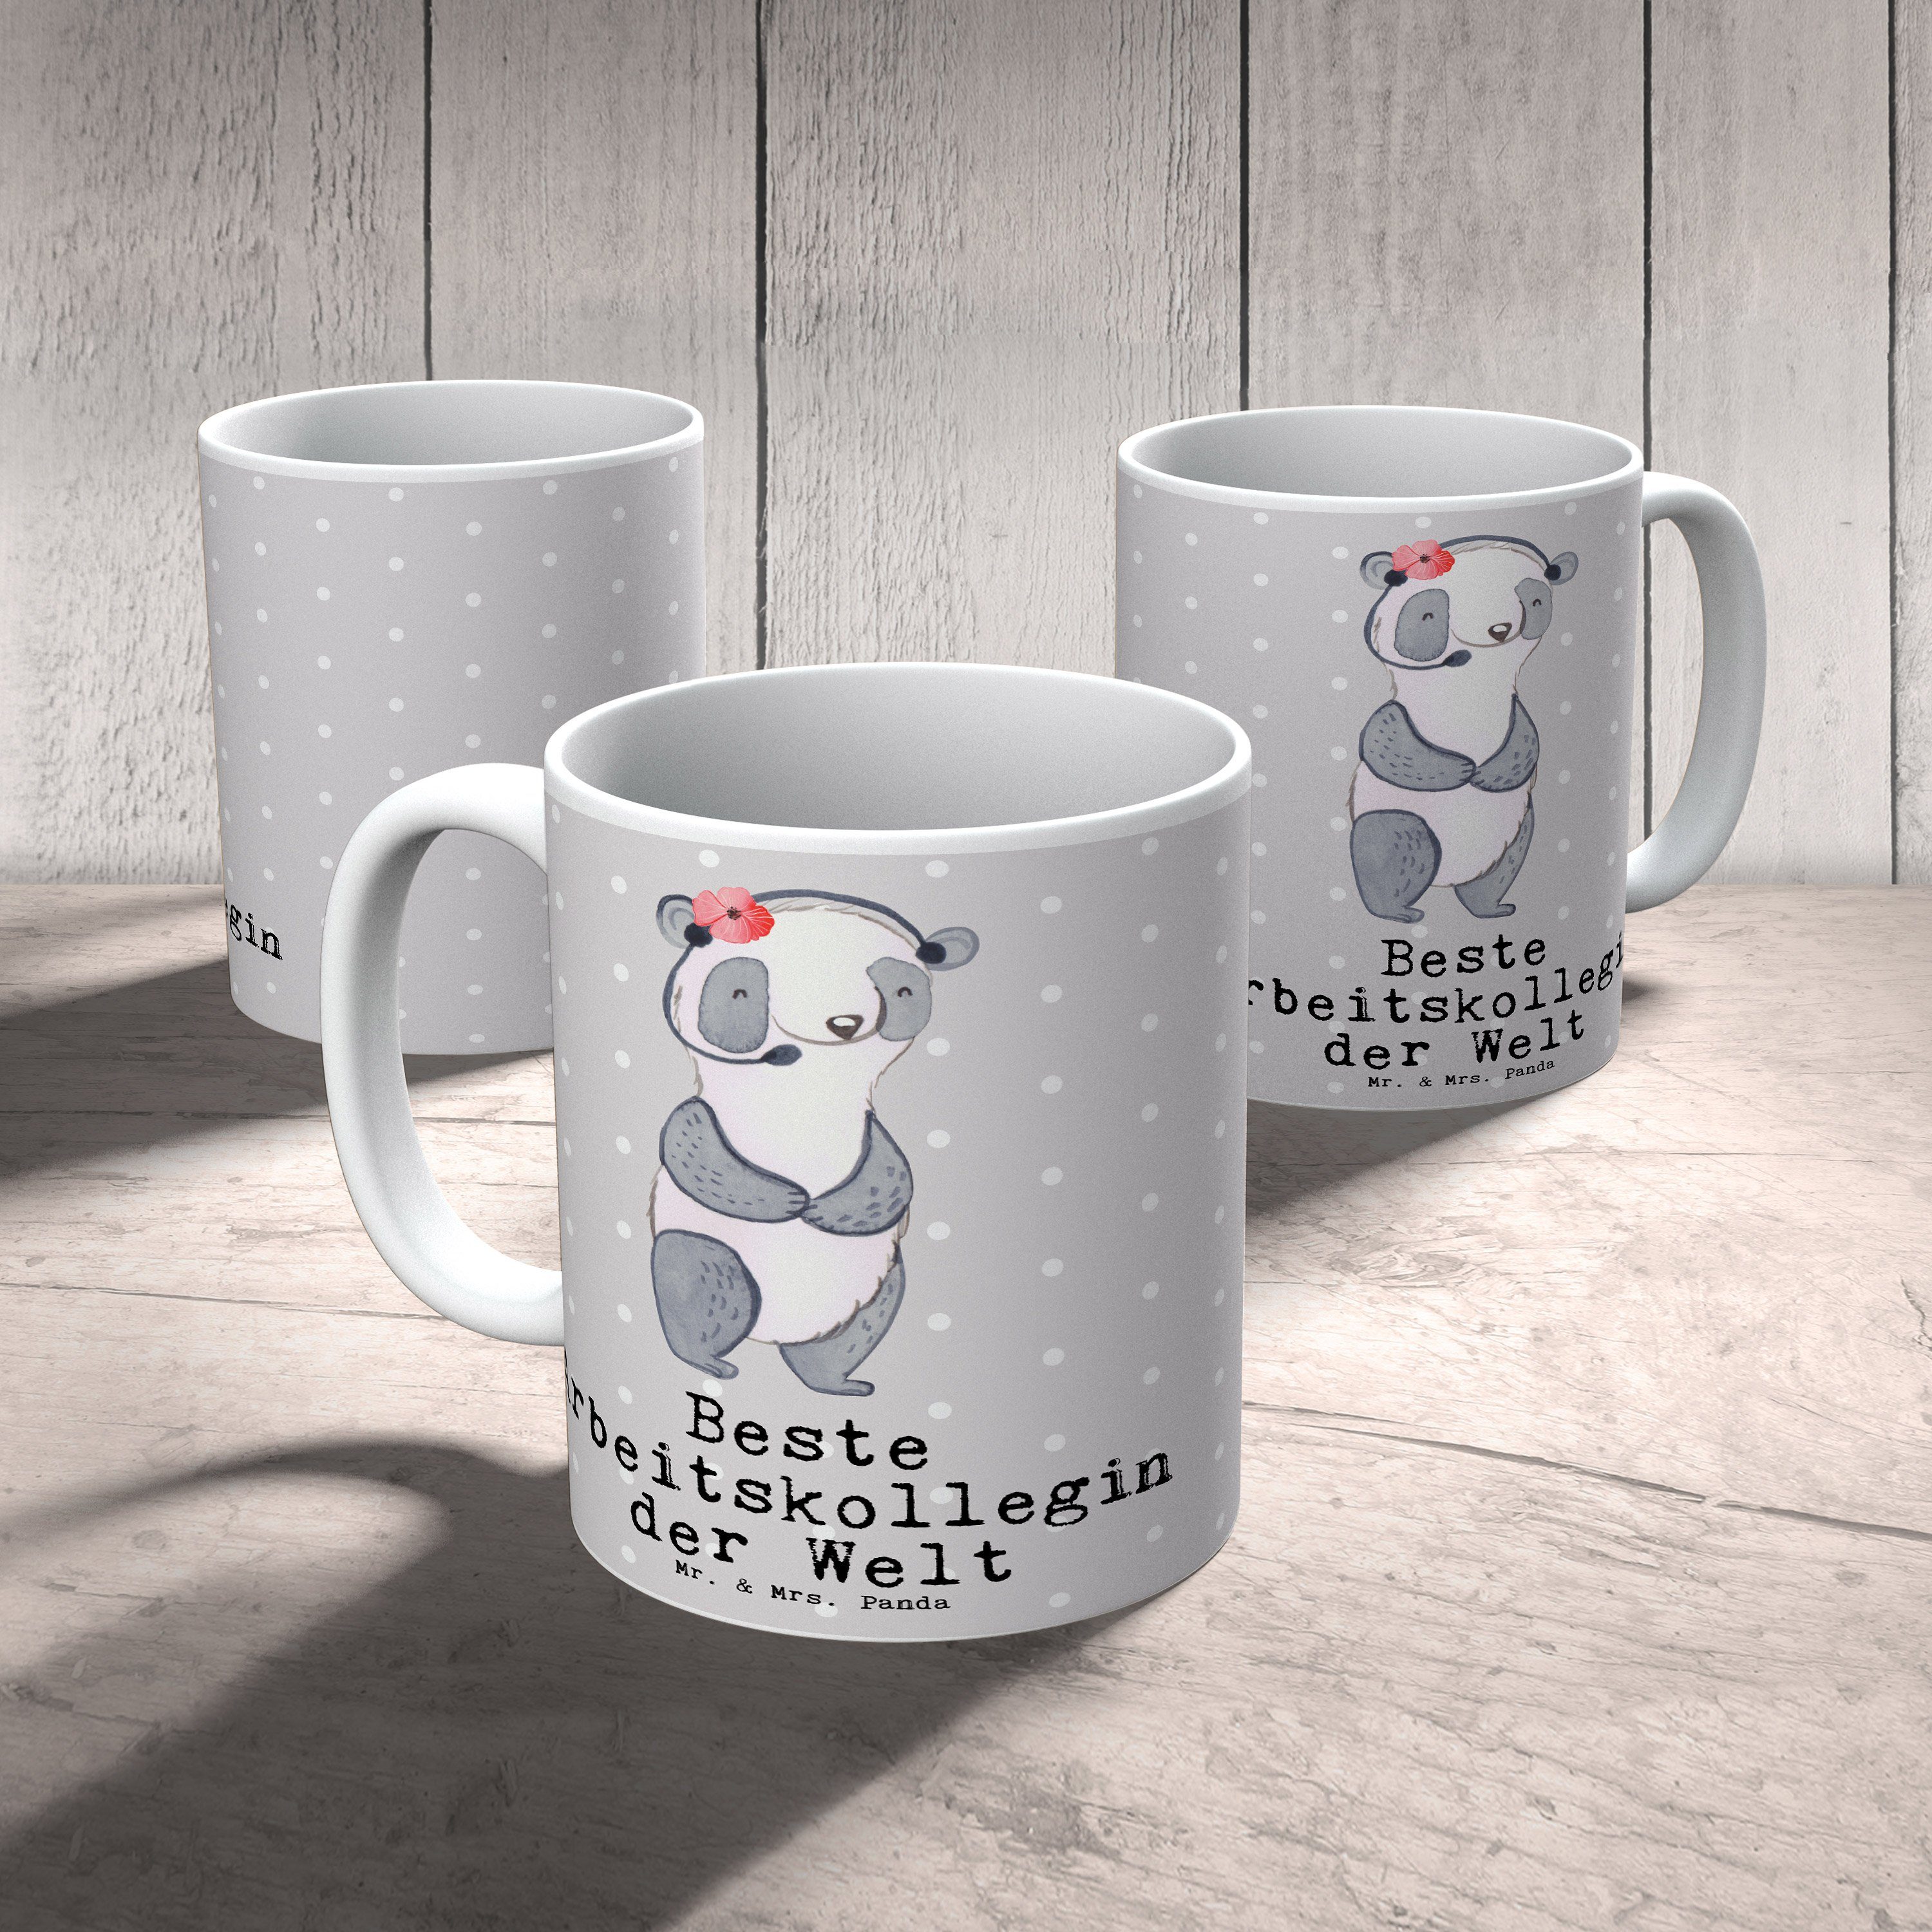 Mr. & Mrs. Beste Arbeitskollegin Panda Geschenk, Welt - Panda Pastell Keramik - Teeta, Grau Tasse der